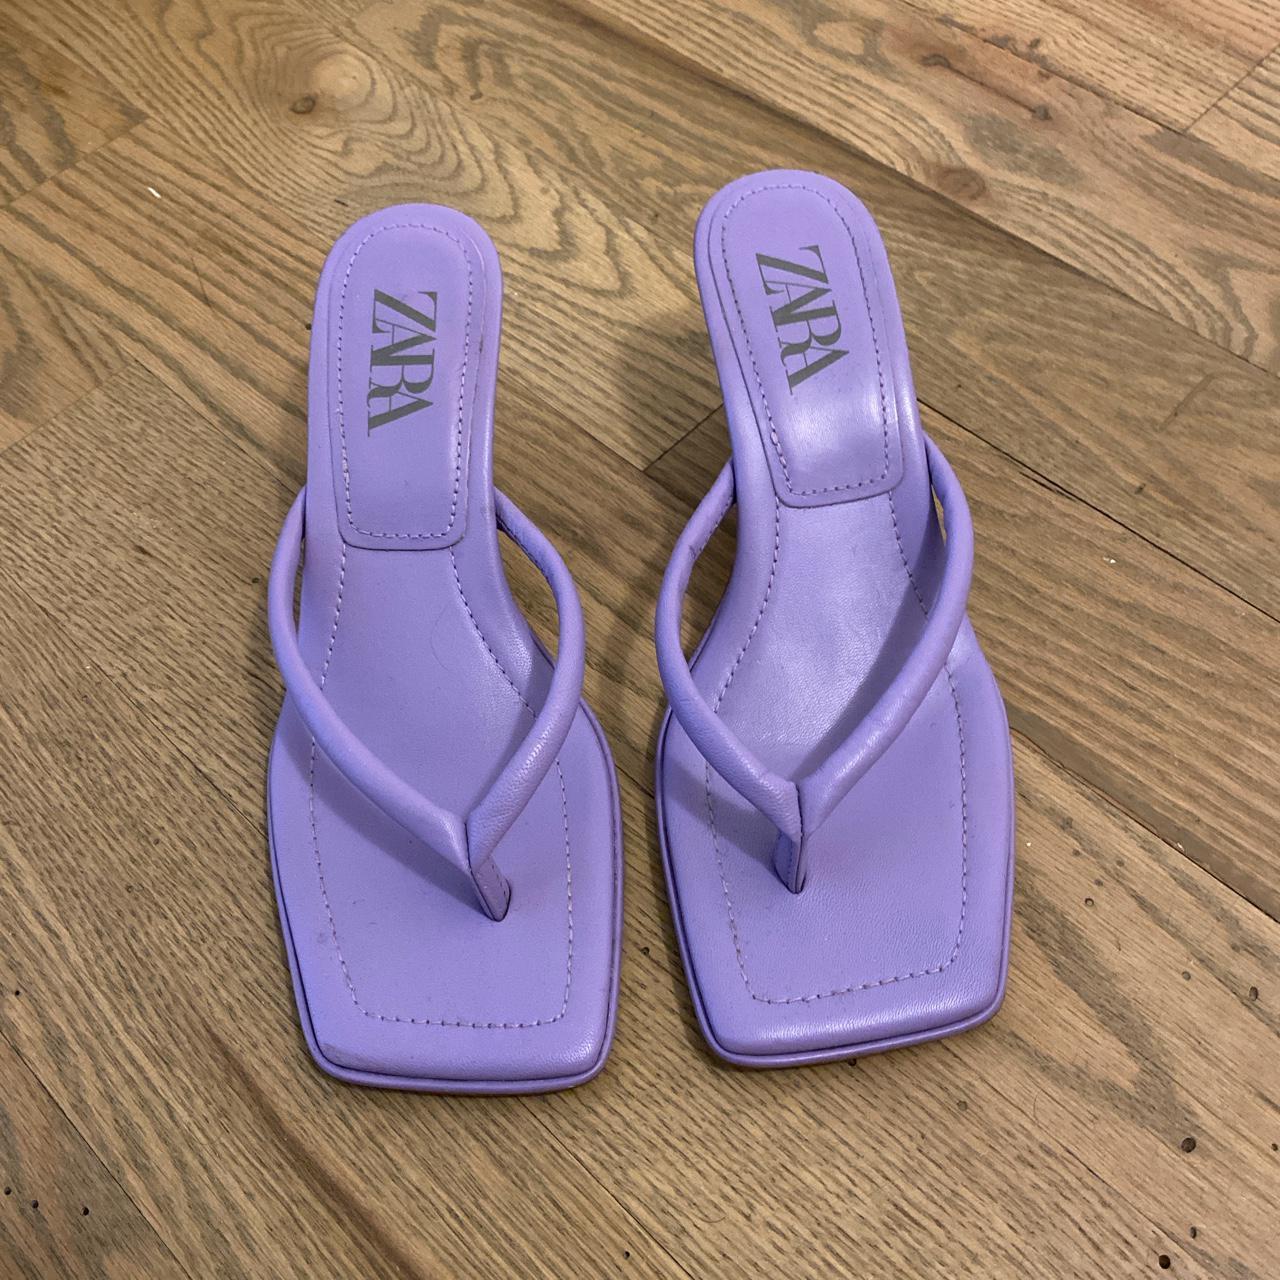 Product Image 2 - Zara lilac sandal heels size